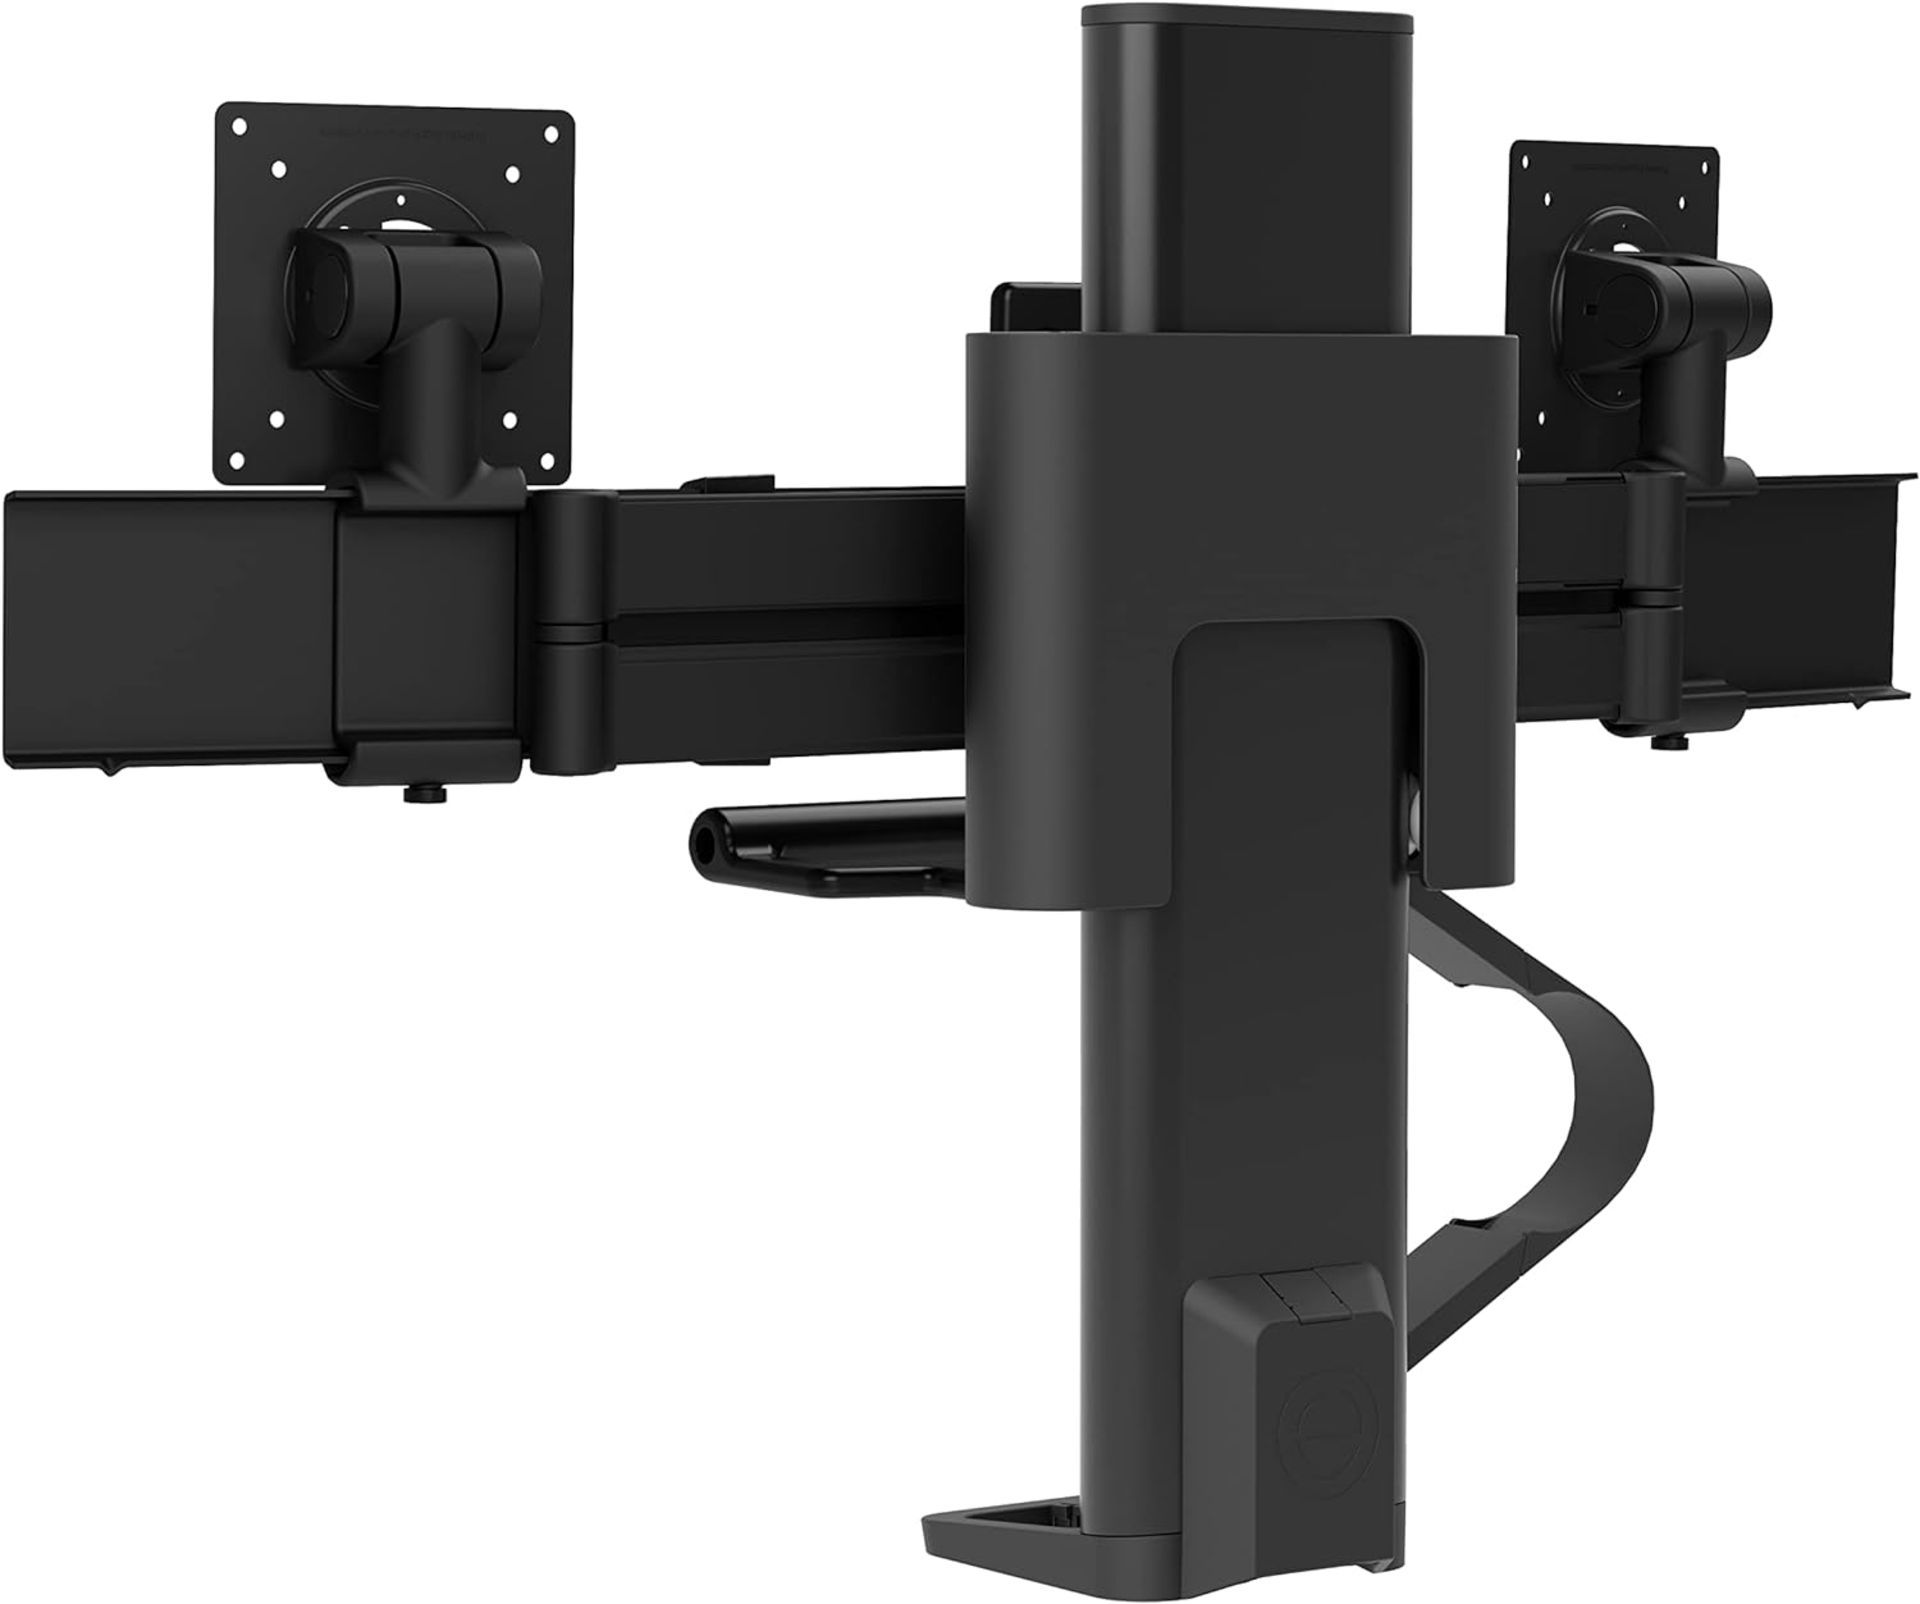 NEW & BOXED ERGOTRON Trace Dual Monitor Arm, VESA Desk Mount. RRP £417. (PCK5). for 2 Monitors Up to - Bild 7 aus 8